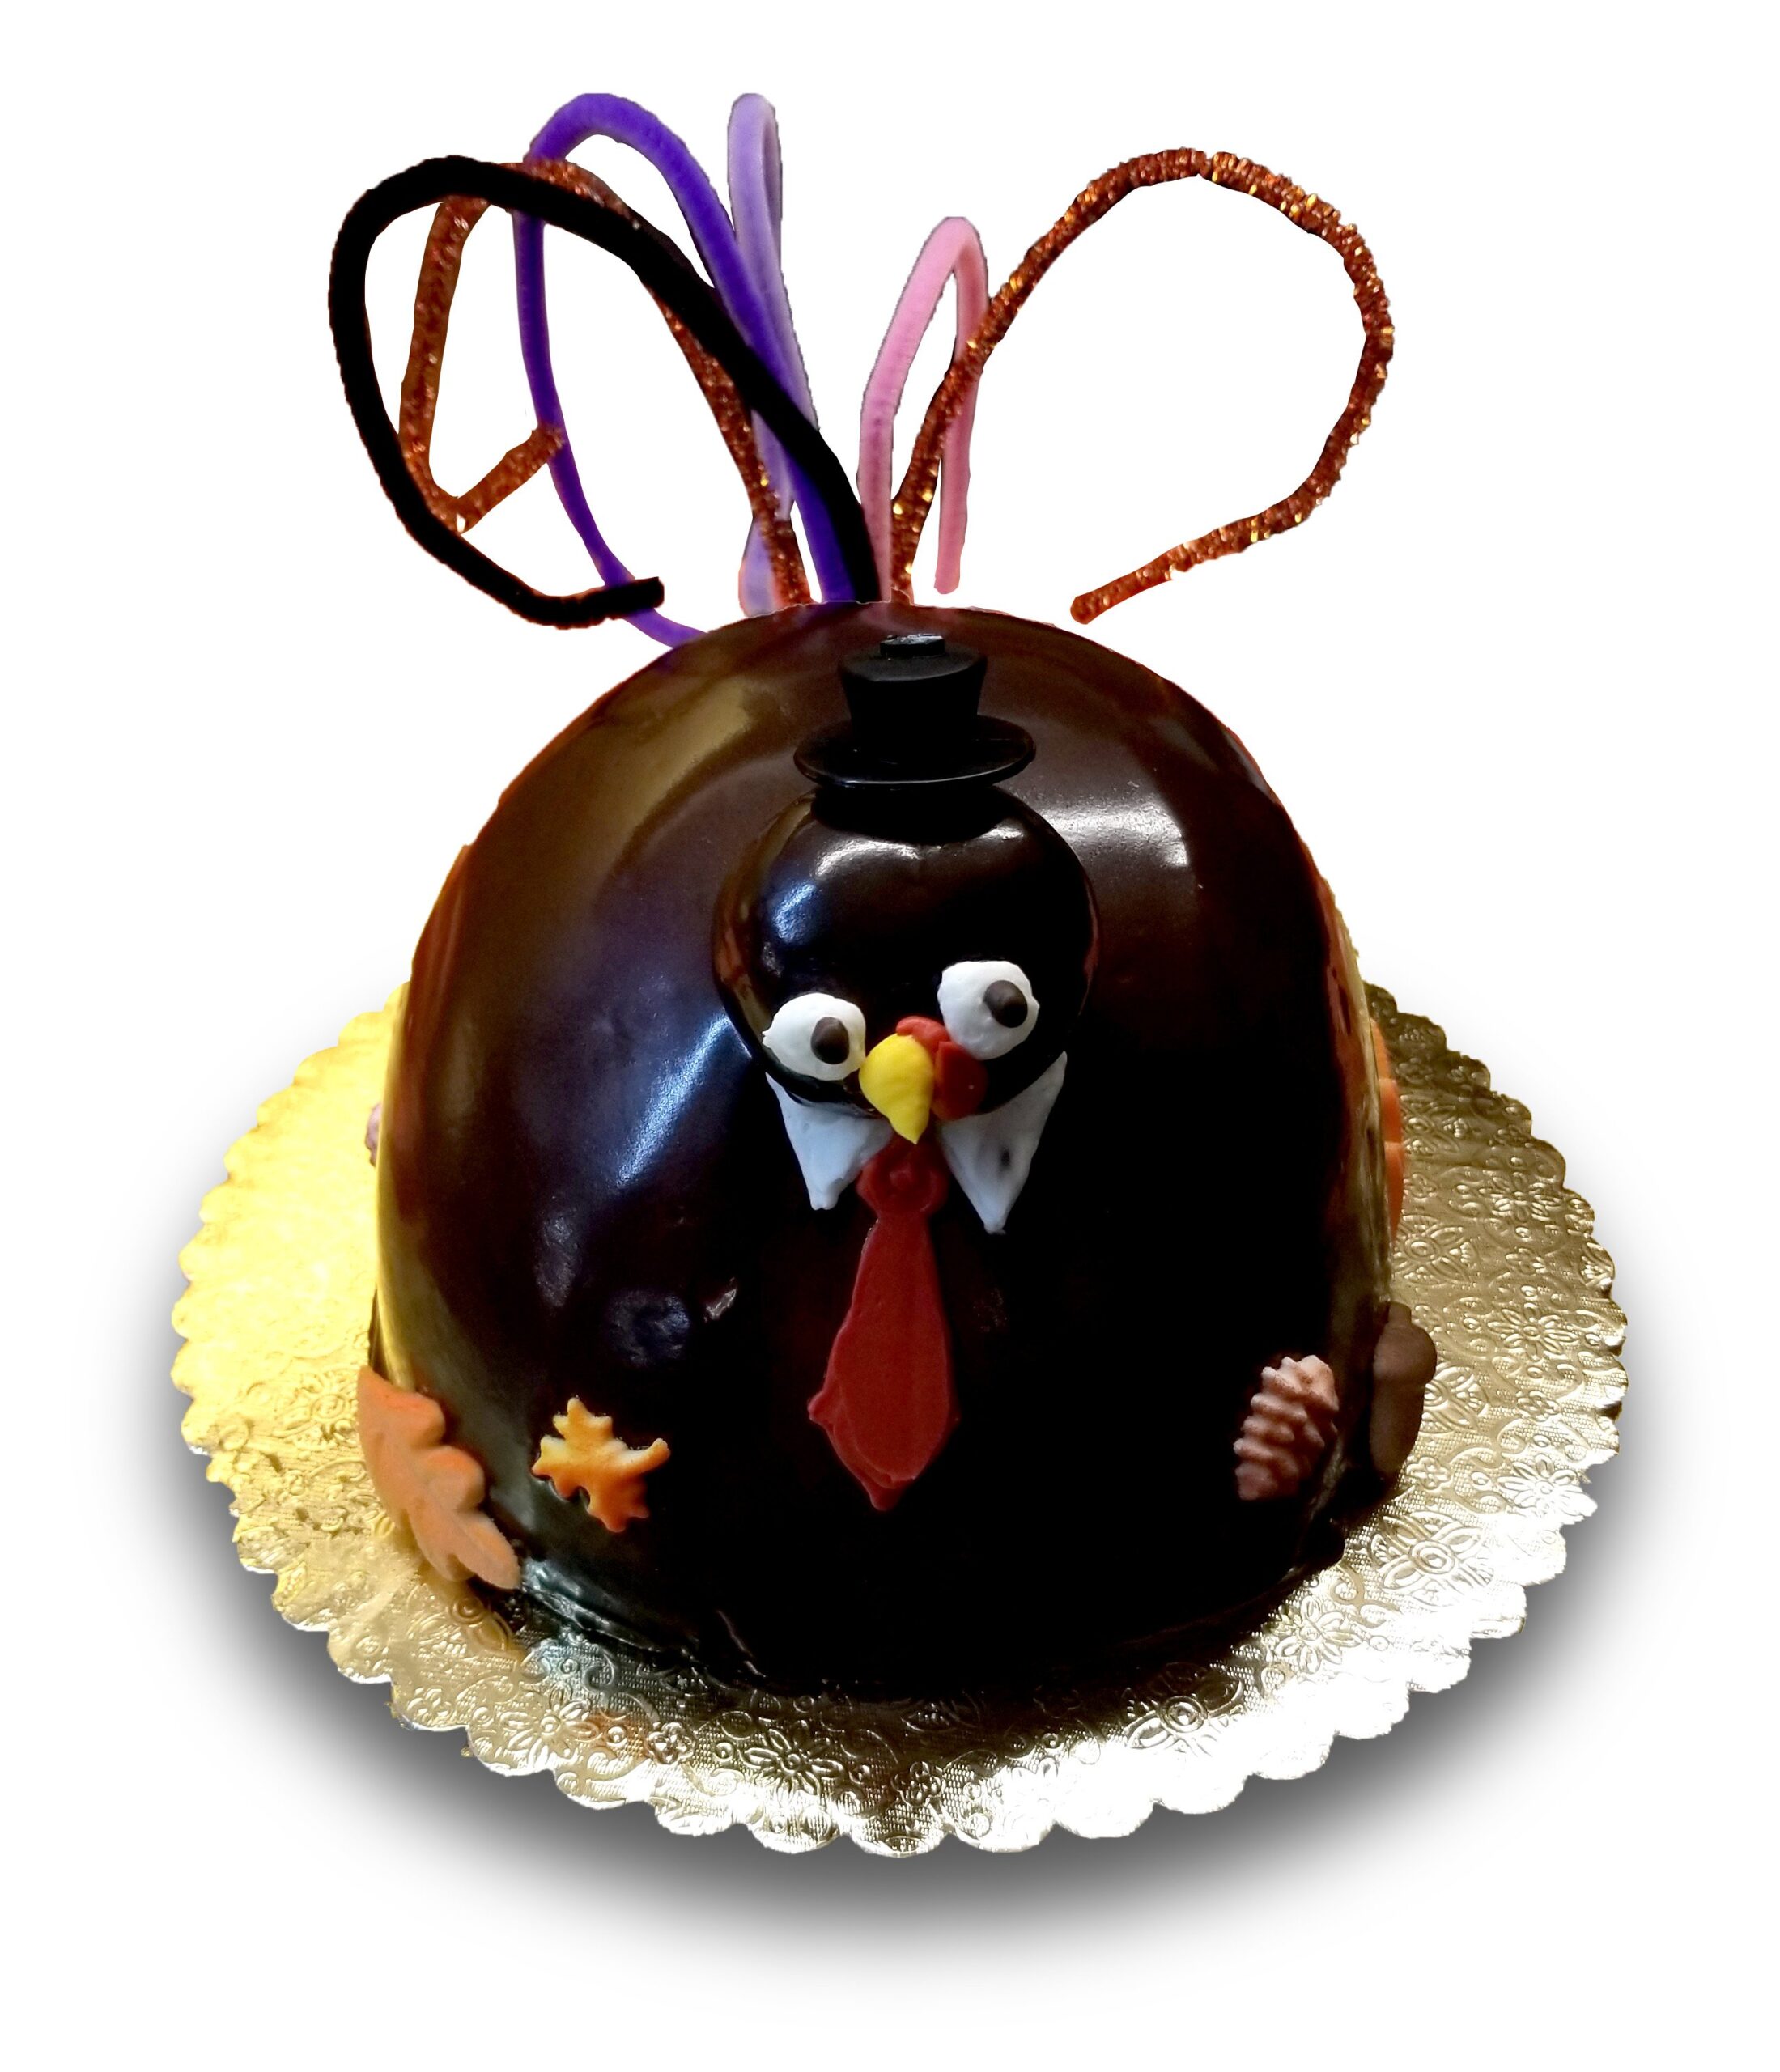 Turkey shaped Thanksgiving cake poured in ganache